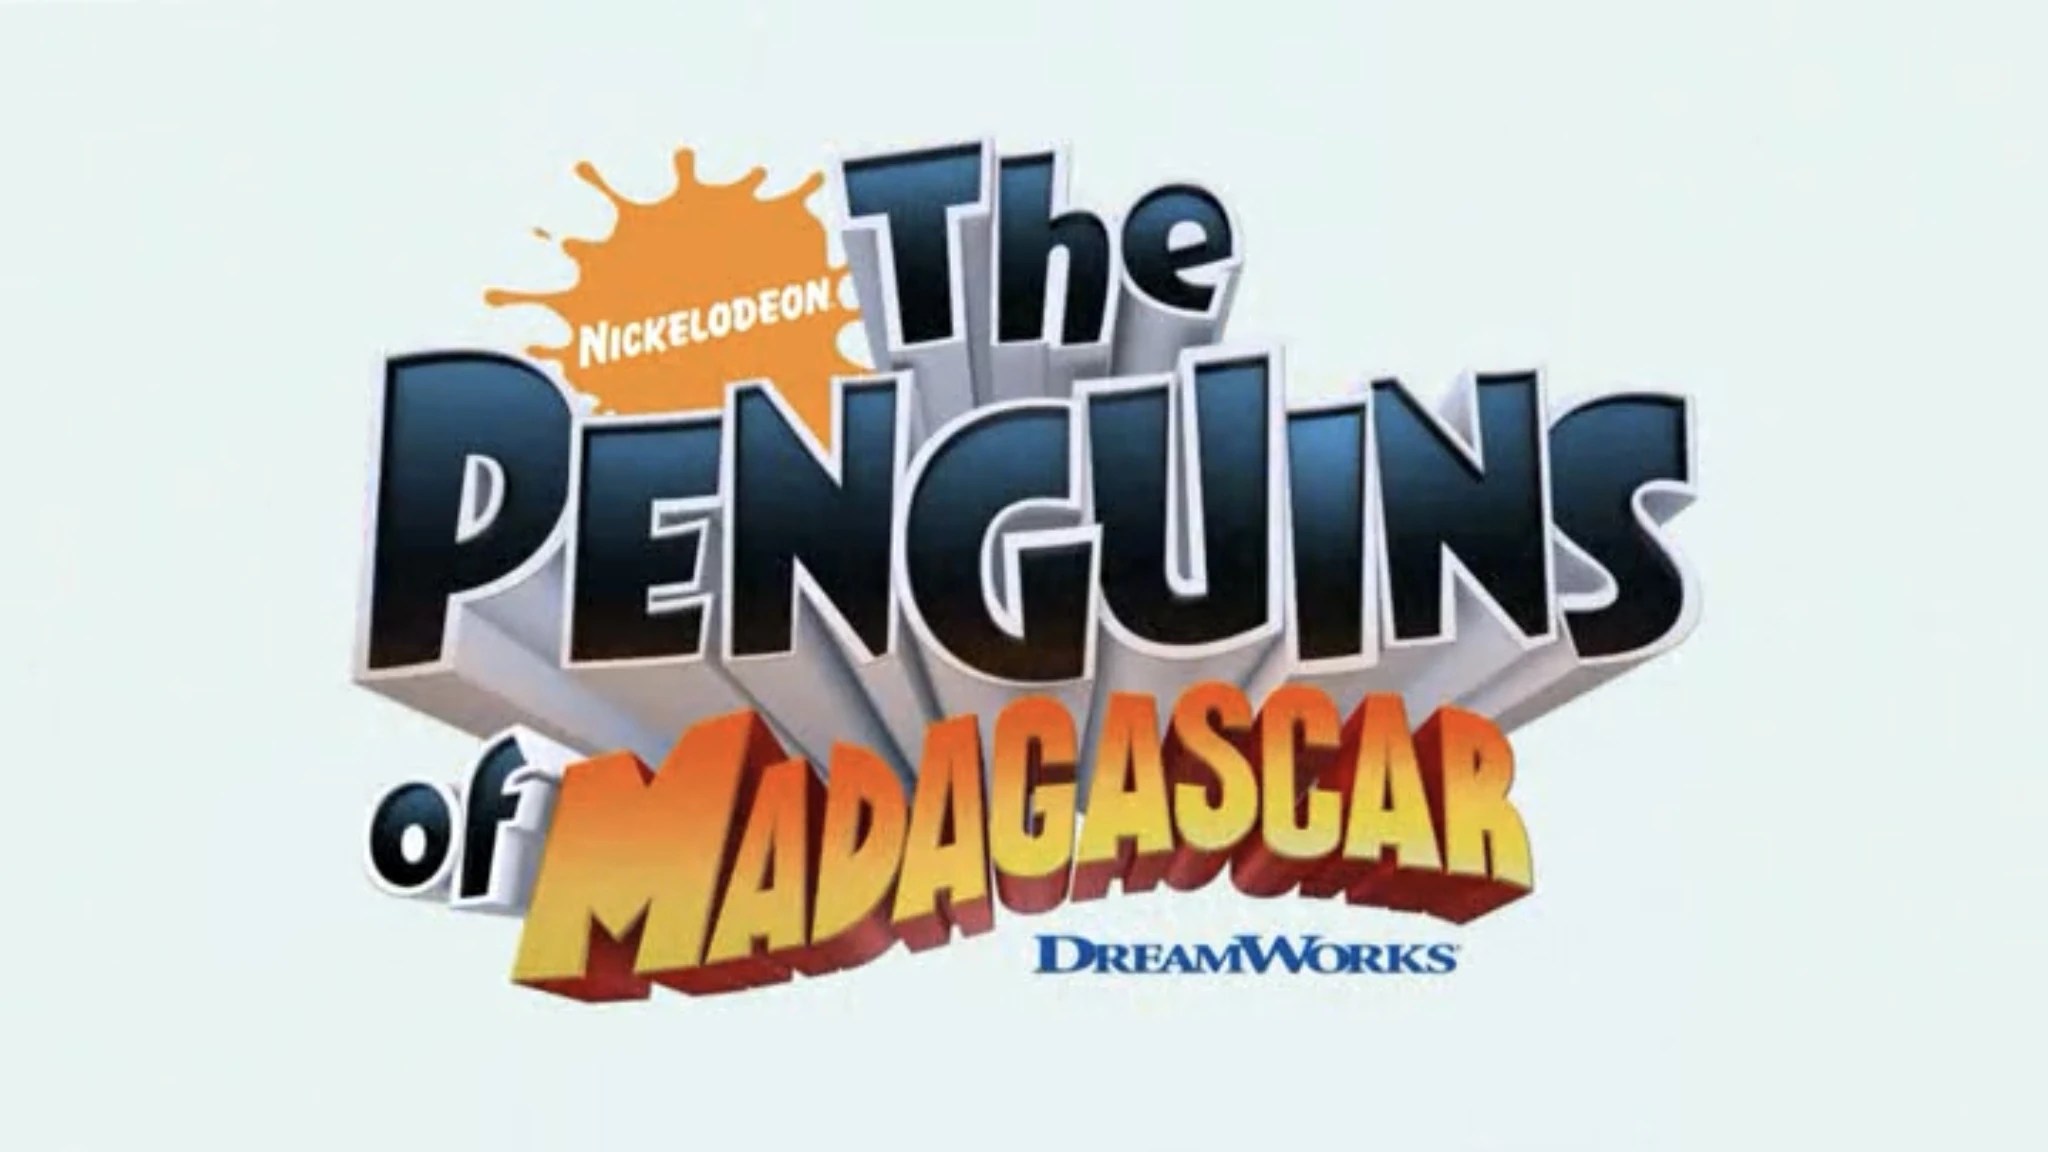 Penguins of madagascar logo.webp